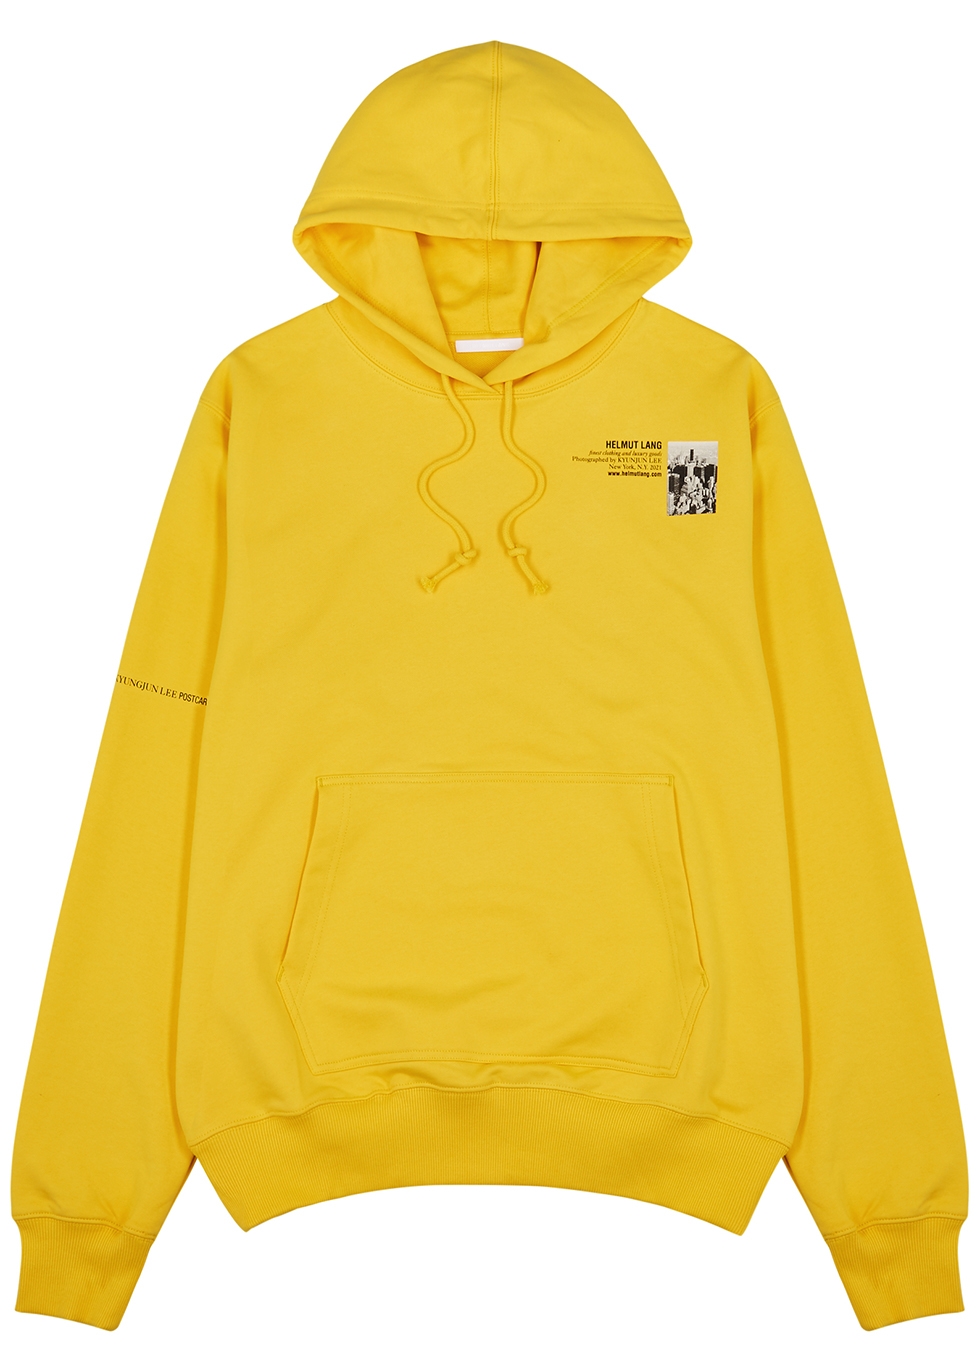 Helmut Lang X Kyungjun Lee yellow hooded cotton sweatshirt